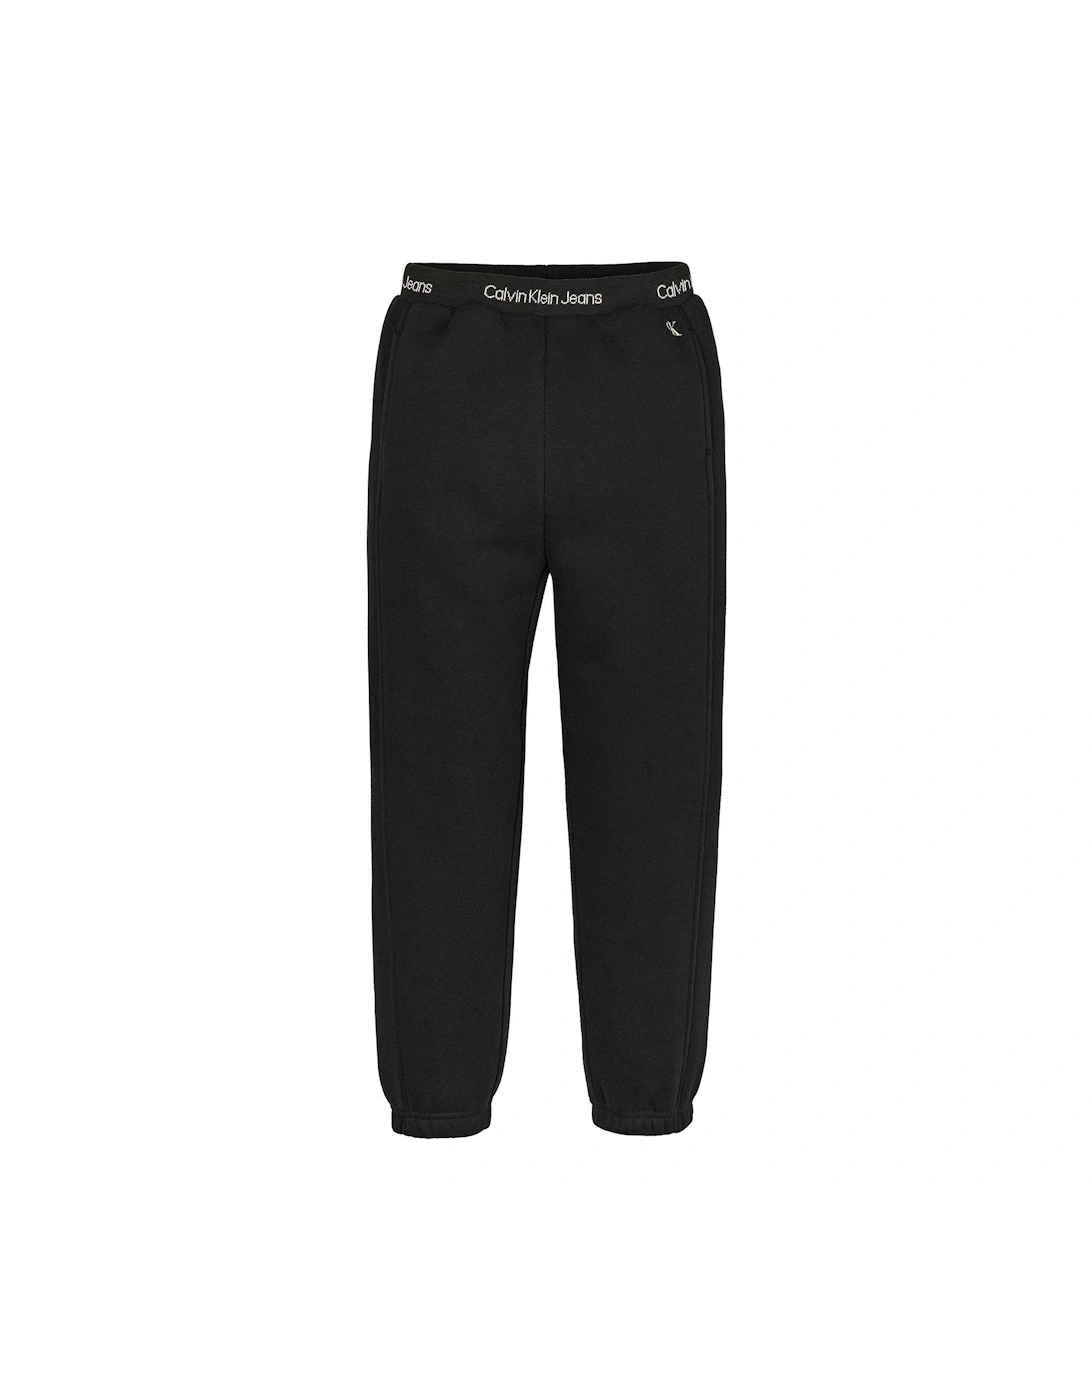 Jeans Boys Intarsia Jogger - Black, 3 of 2